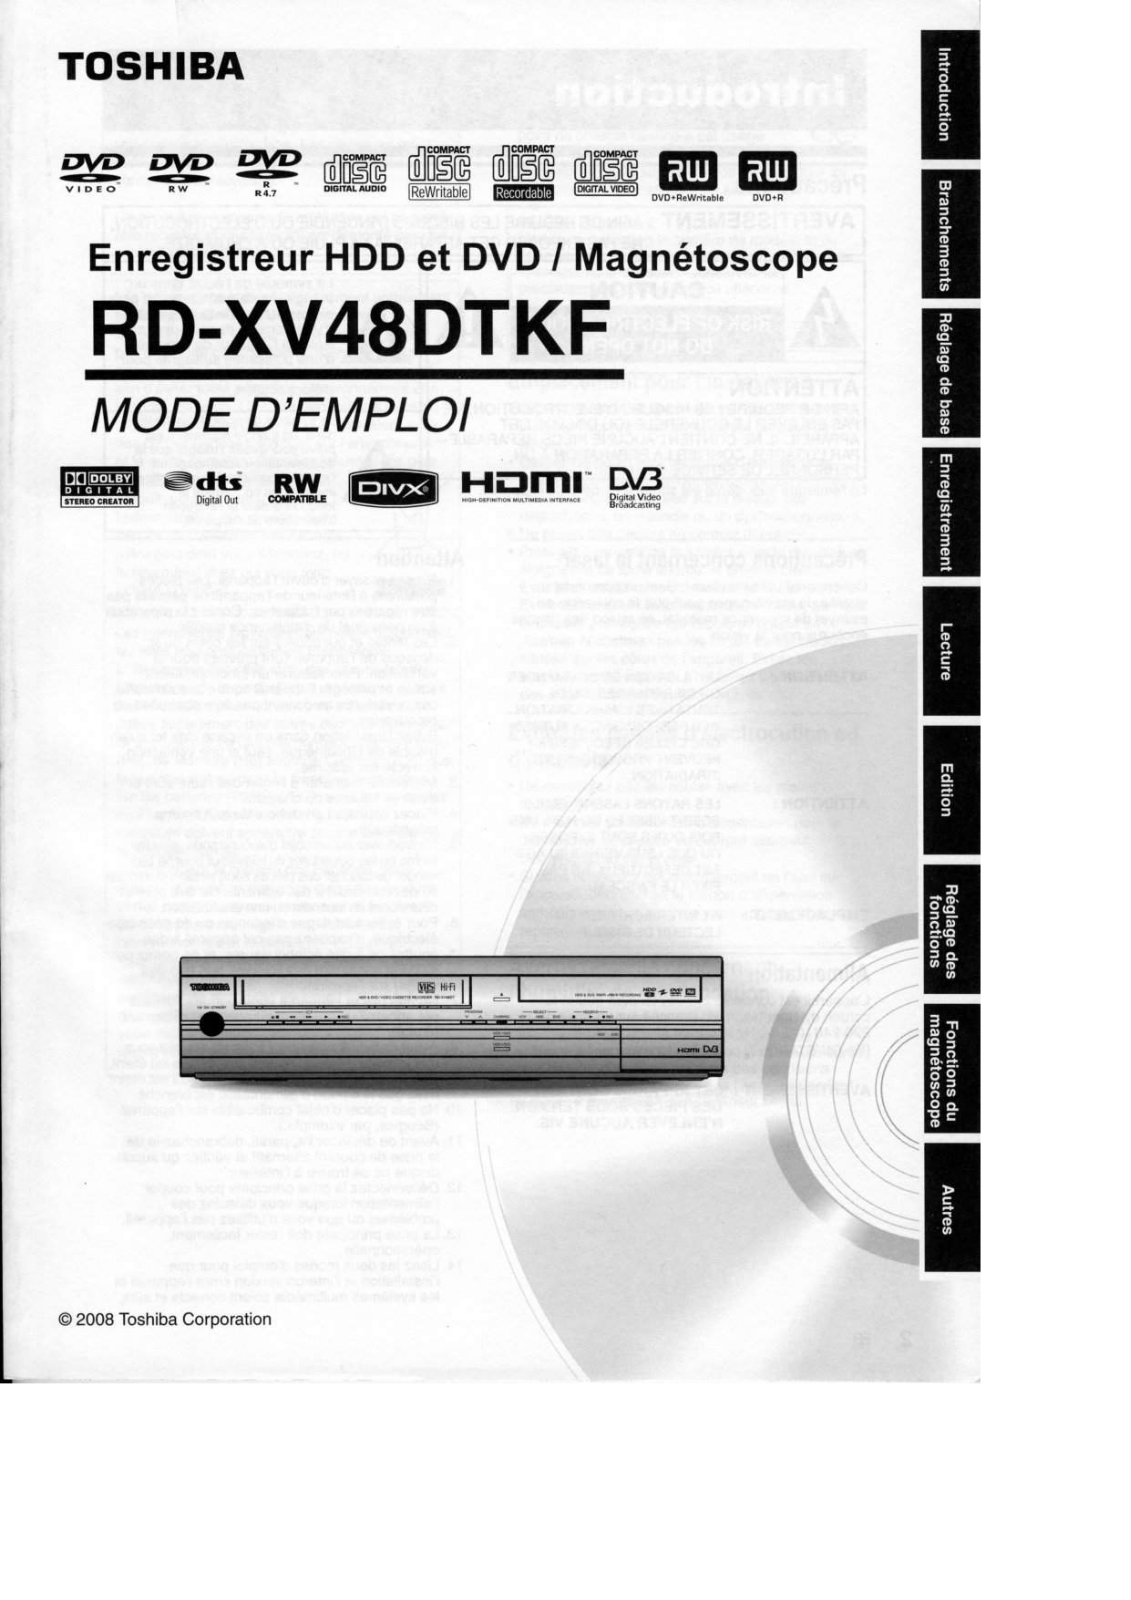 TOSHIBA RD-XV48 User Manual